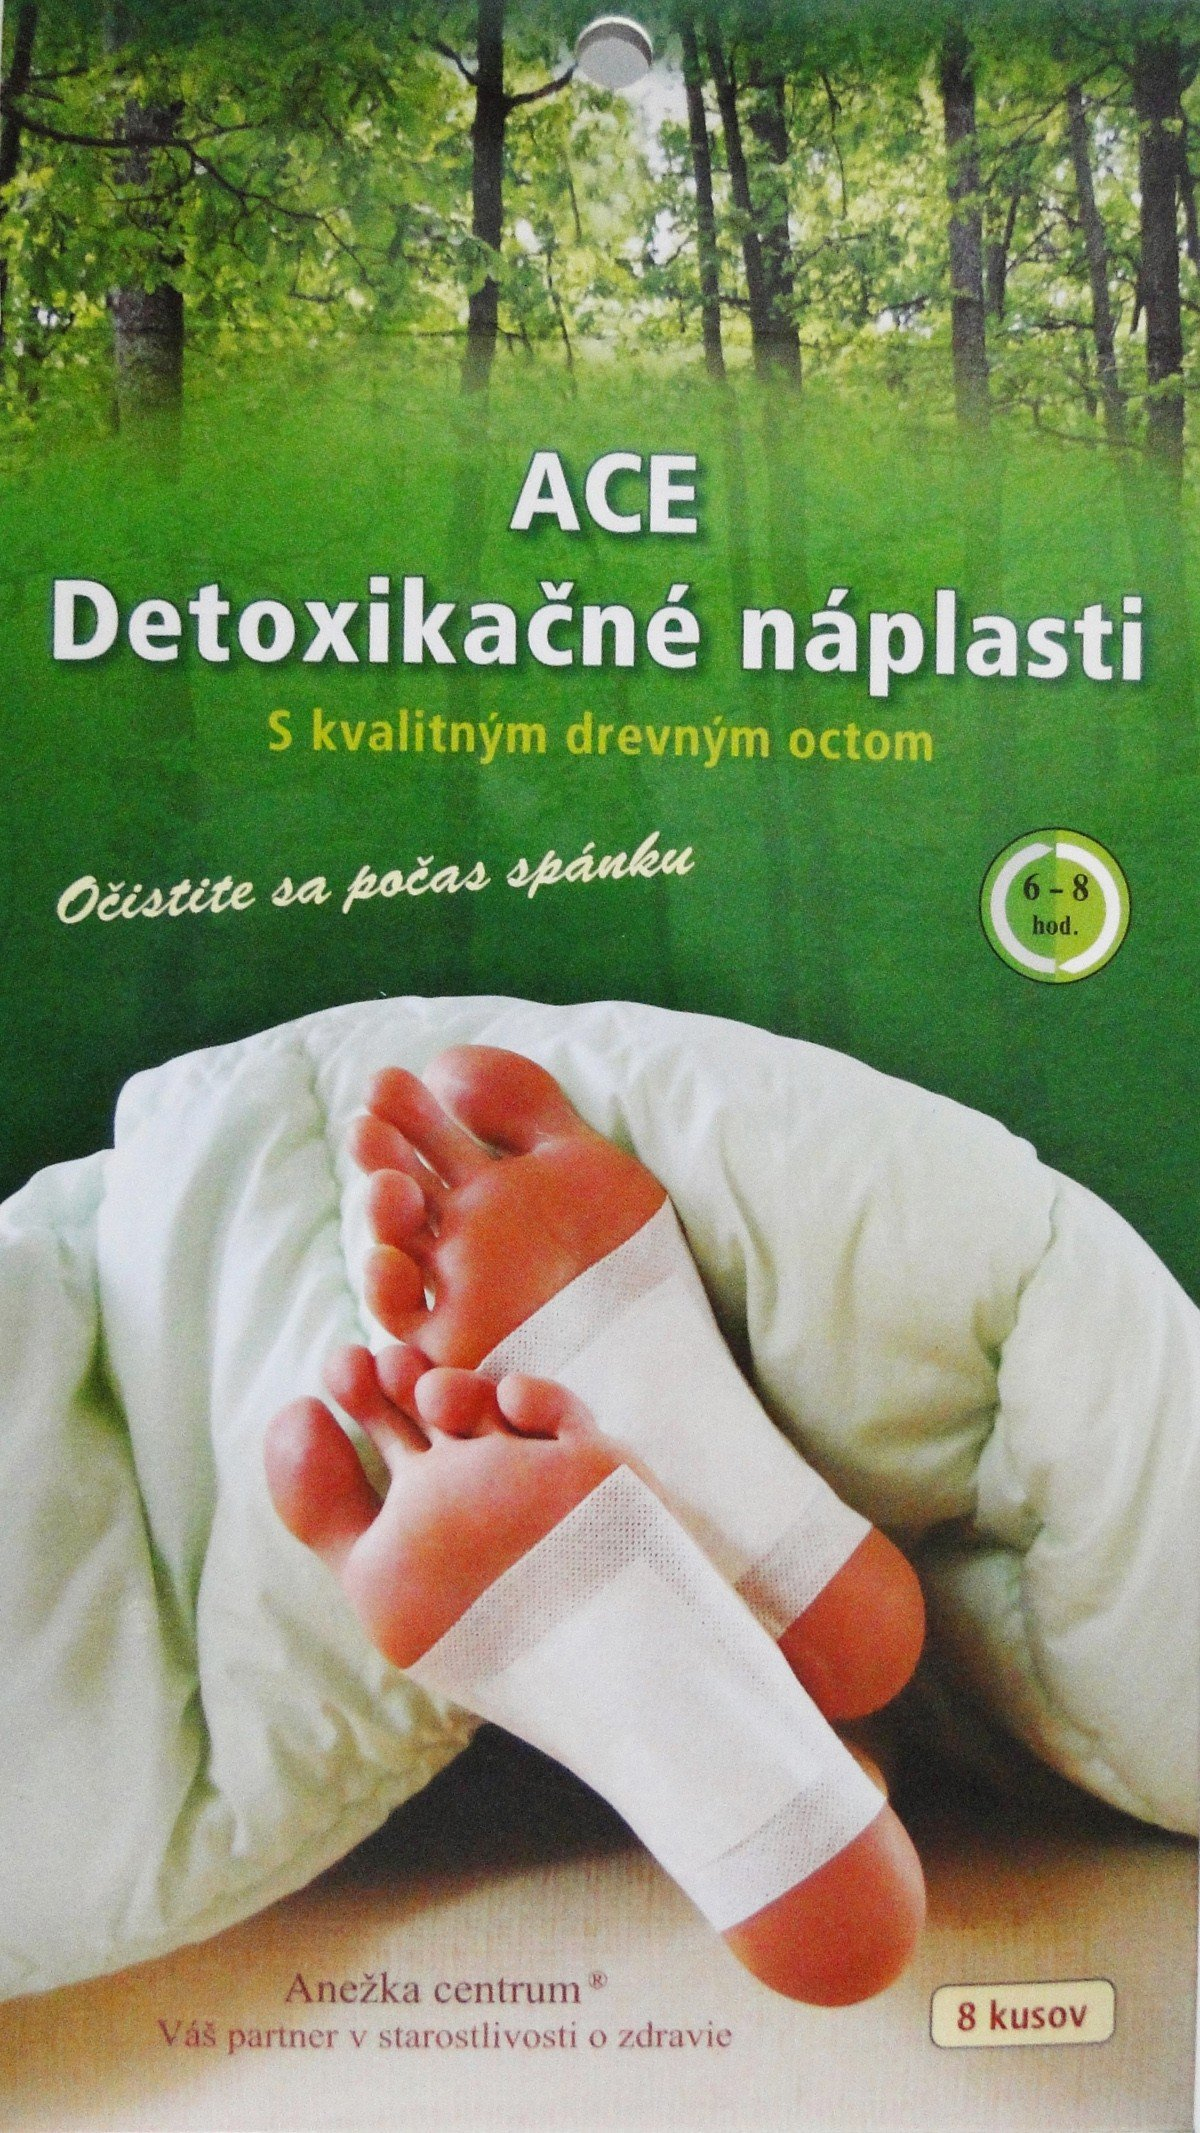 Ace detoxikačné náplasti 8 ks